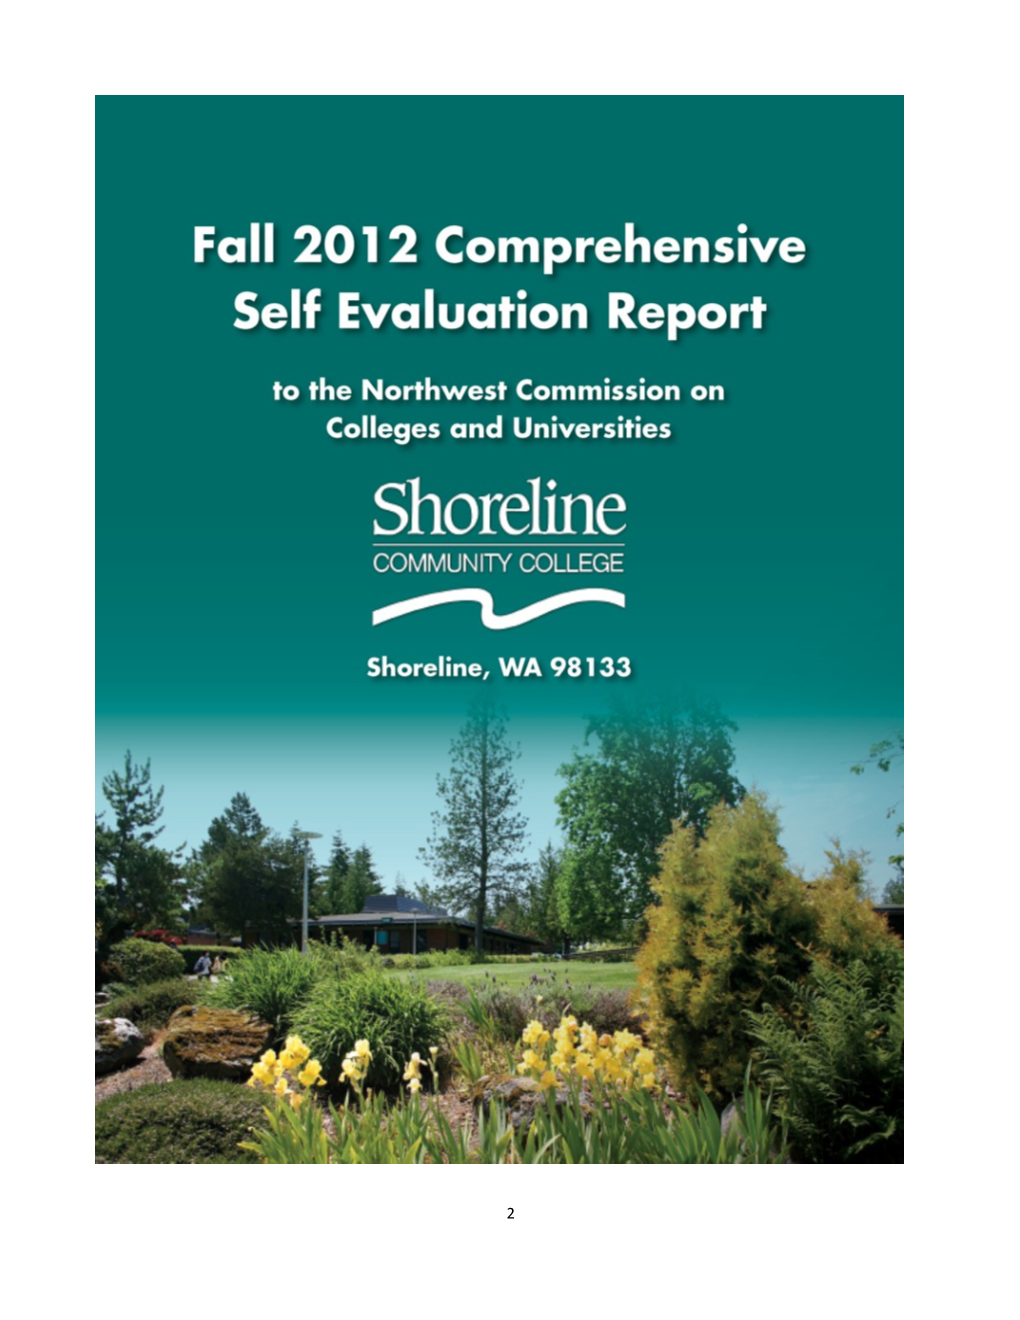 Fall 2012 Comprehensive Self-Evaluation Report